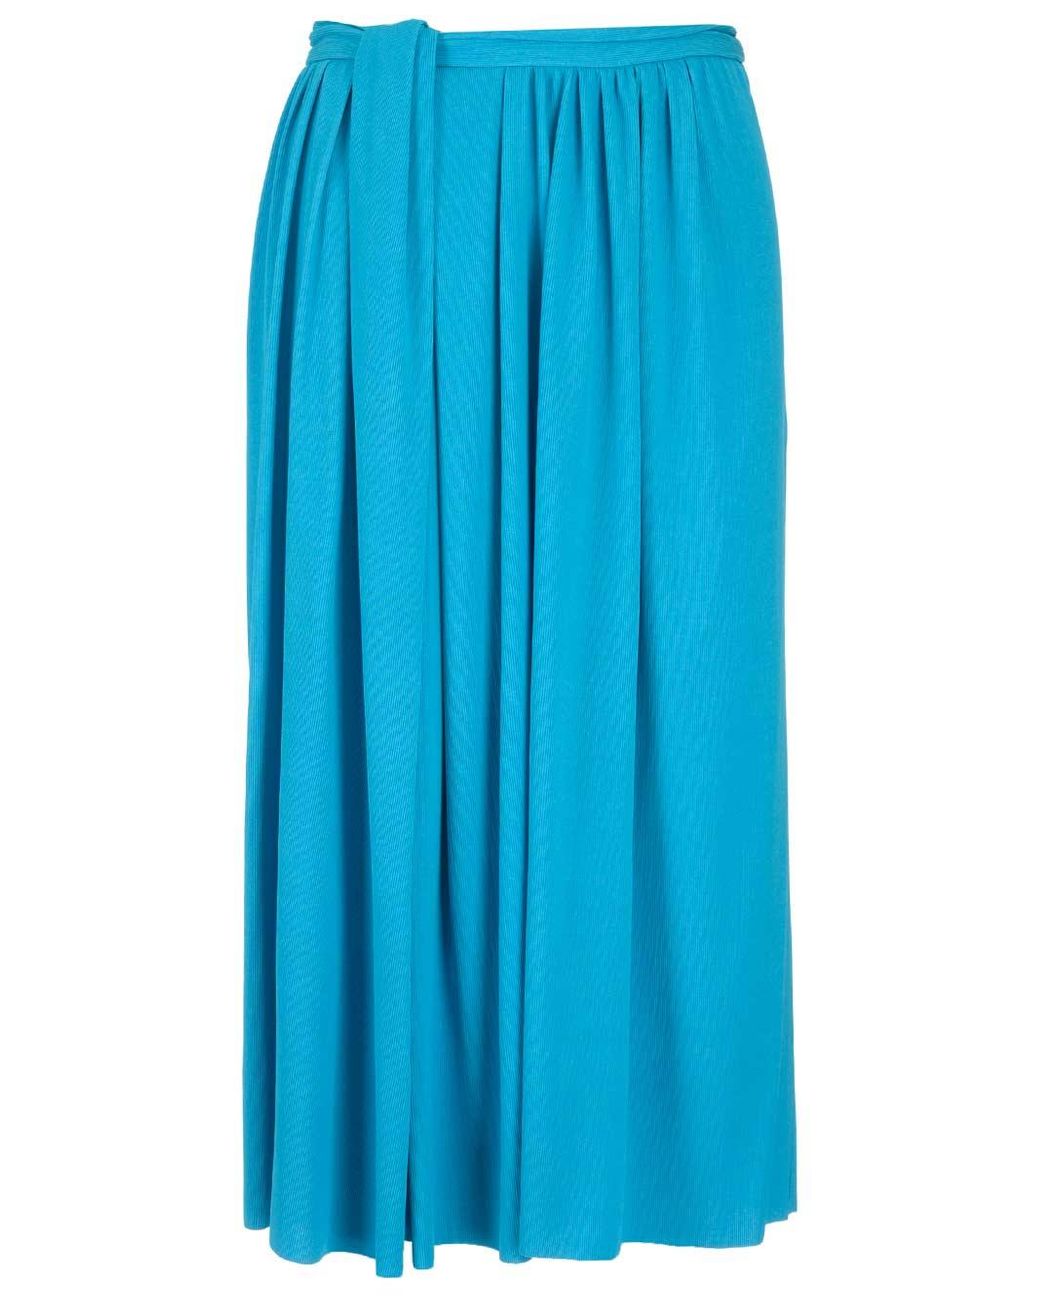 Balenciaga Cotton Pleated Midi Skirt in Blue - Lyst